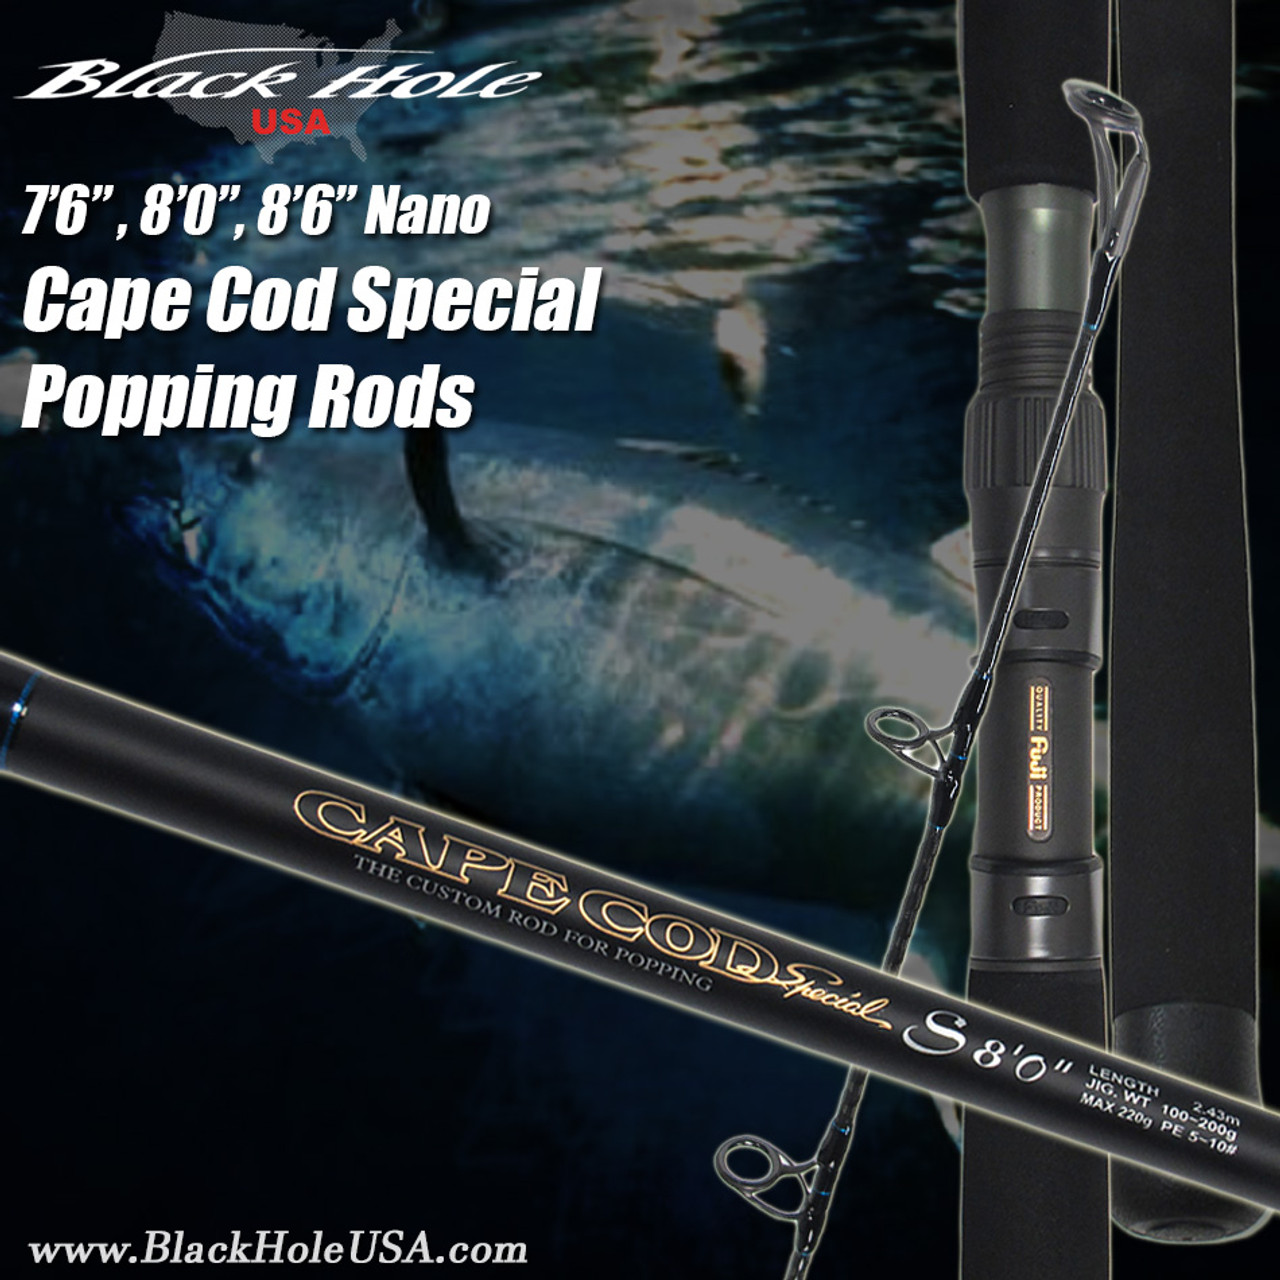 Black Hole 7'6", 8'0", 8'6" Cape Cod Special NANO Popping Rods